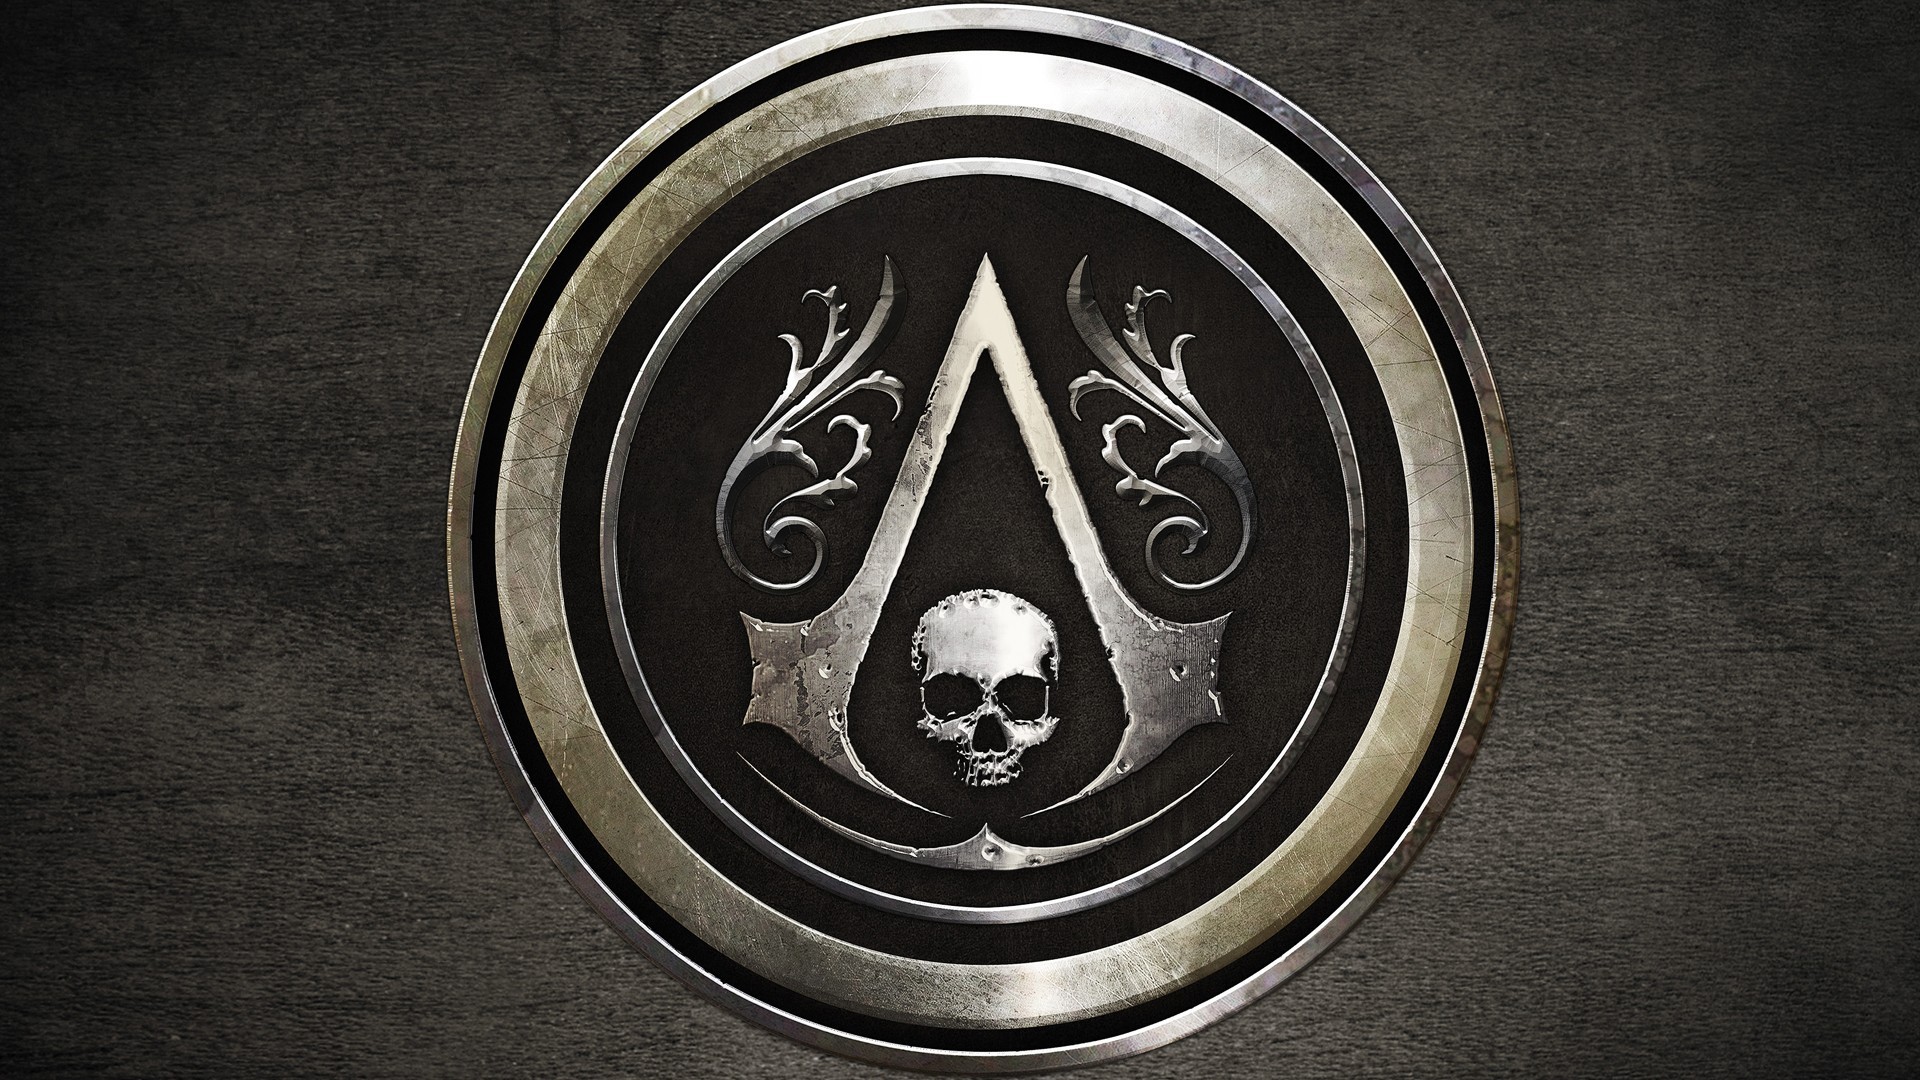 Assassins Creed, Assassins Creed: Black Flag Wallpaper